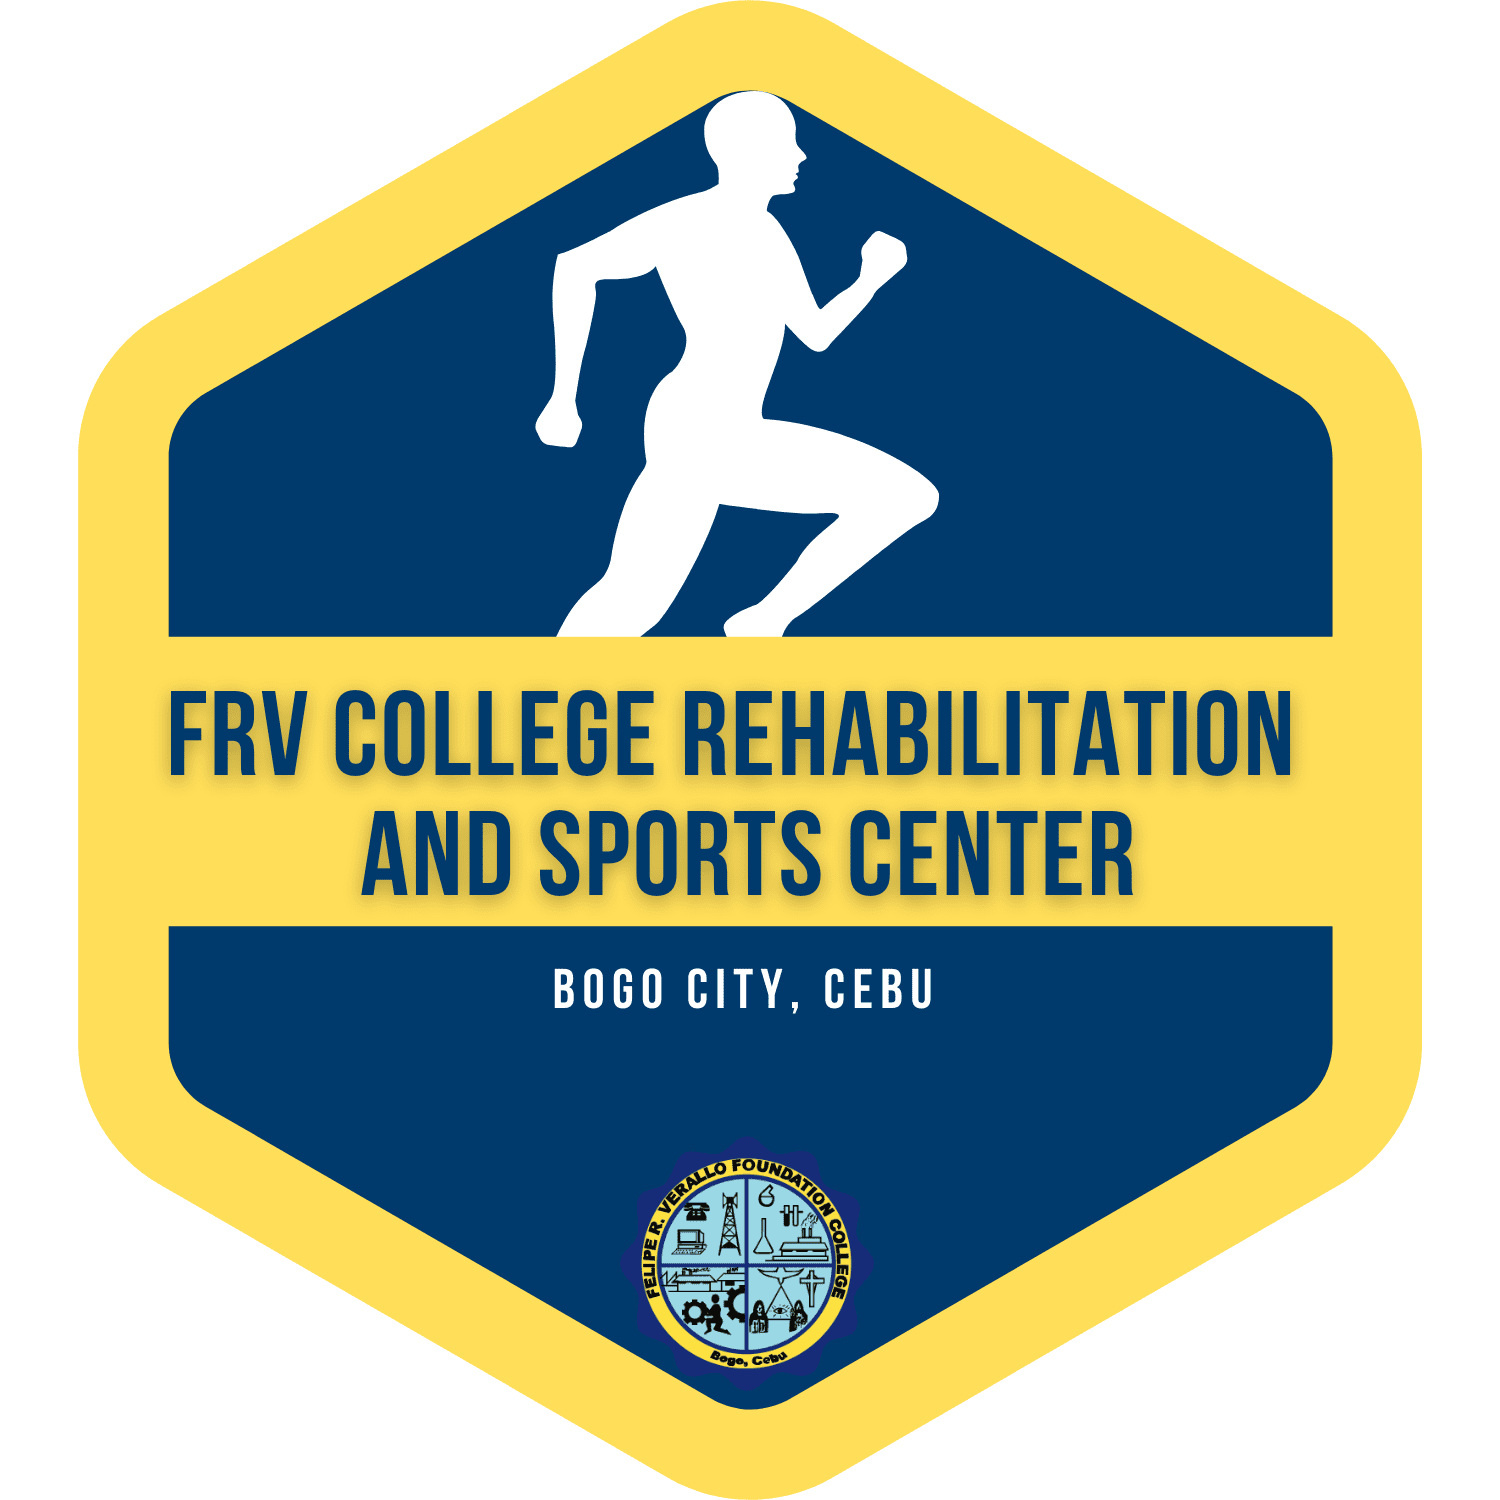 FRV College Rehabilitation and Sports Center